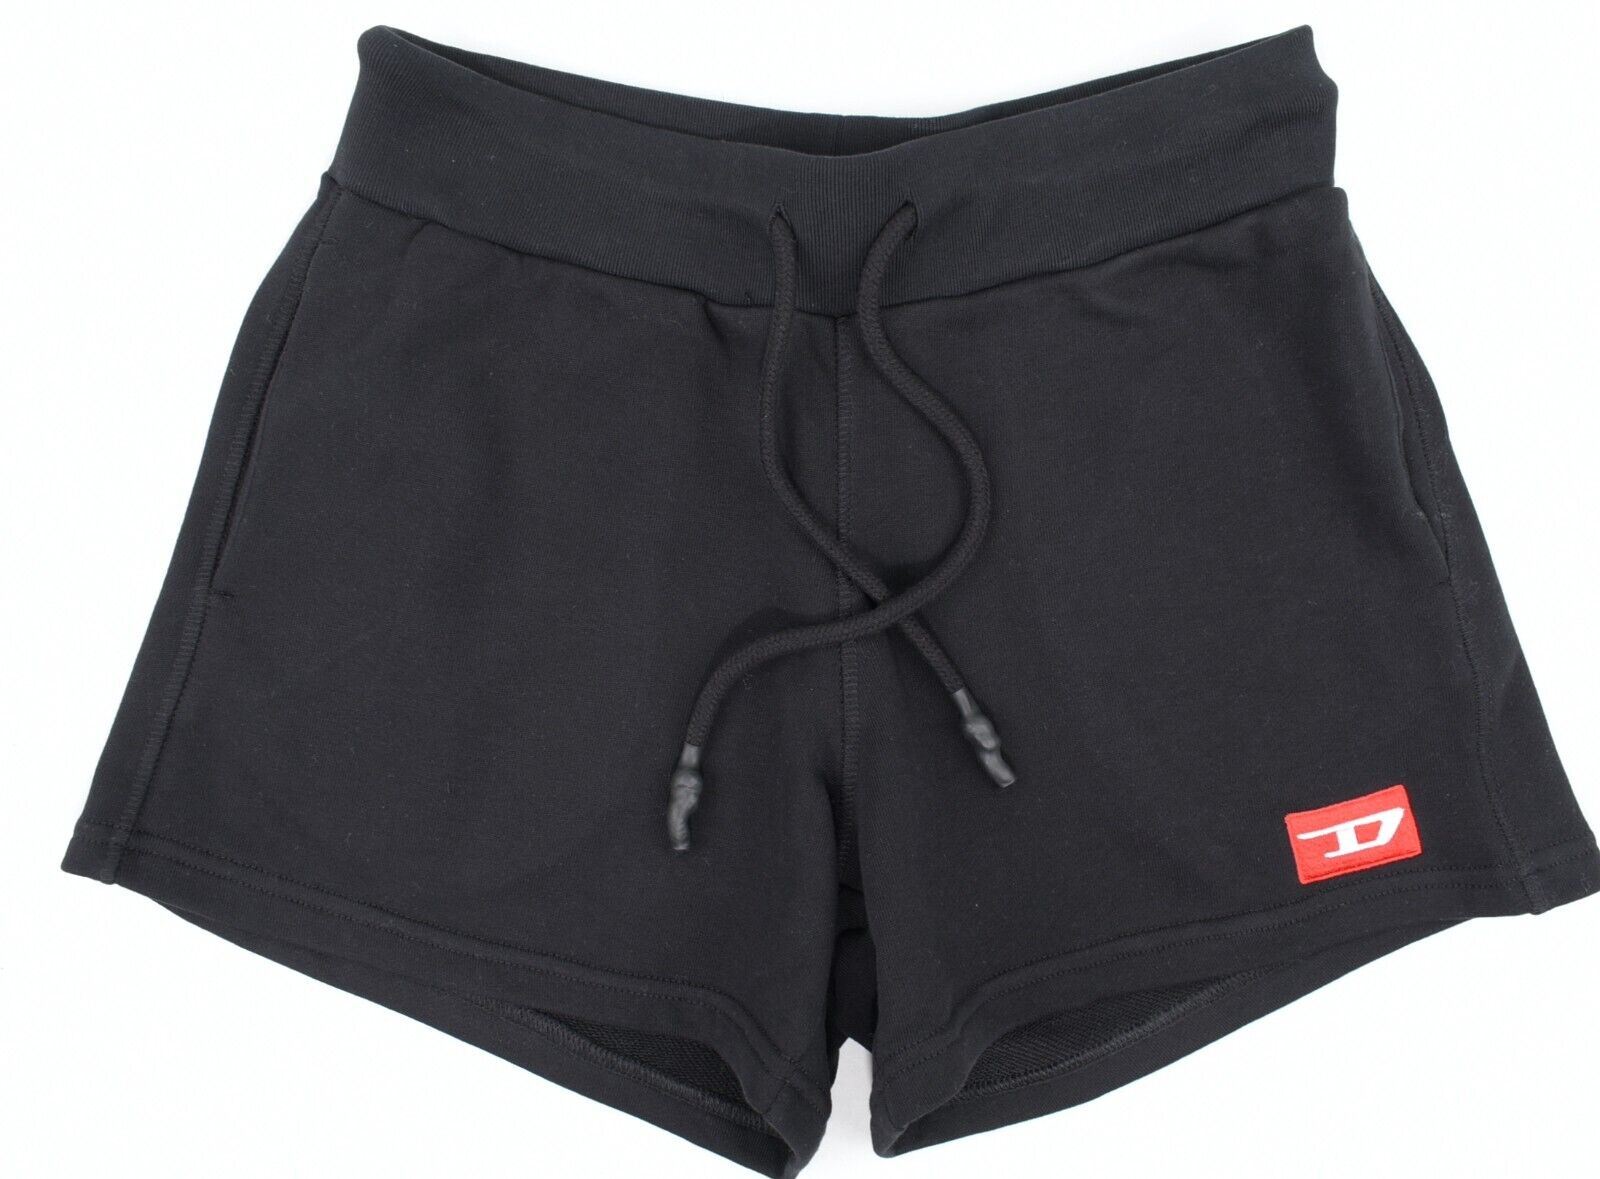 DIESEL Loungewear: Women's French Terry Sweat Shorts, Black, size M /UK 12